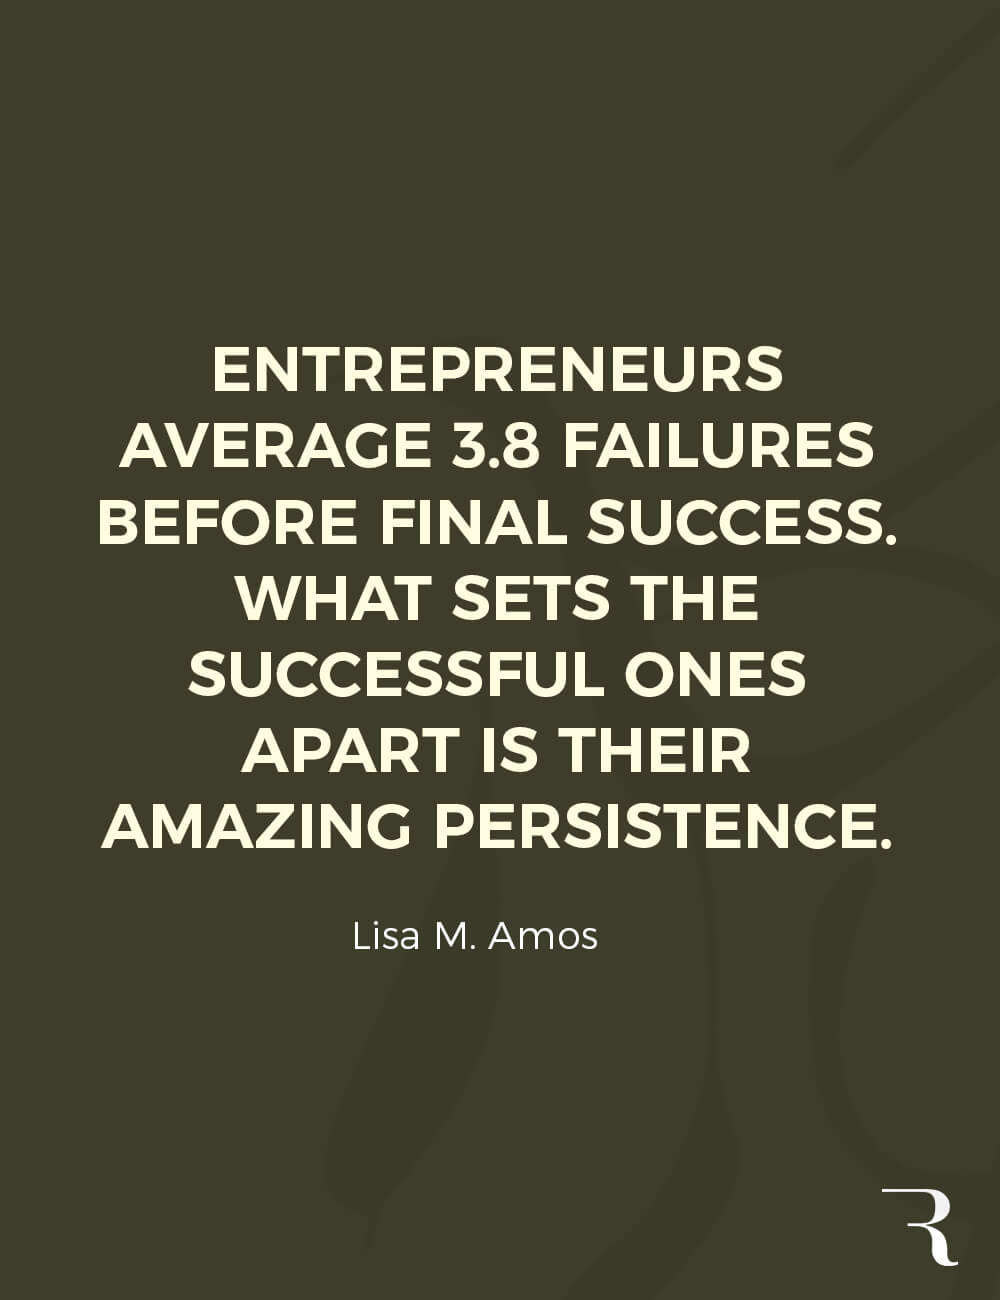 Motivational Quotes: "Entrepreneurs average 3.8 failures before success. What sets them apart is persistence." 112 Motivational Quotes to Be a Better Entrepreneur